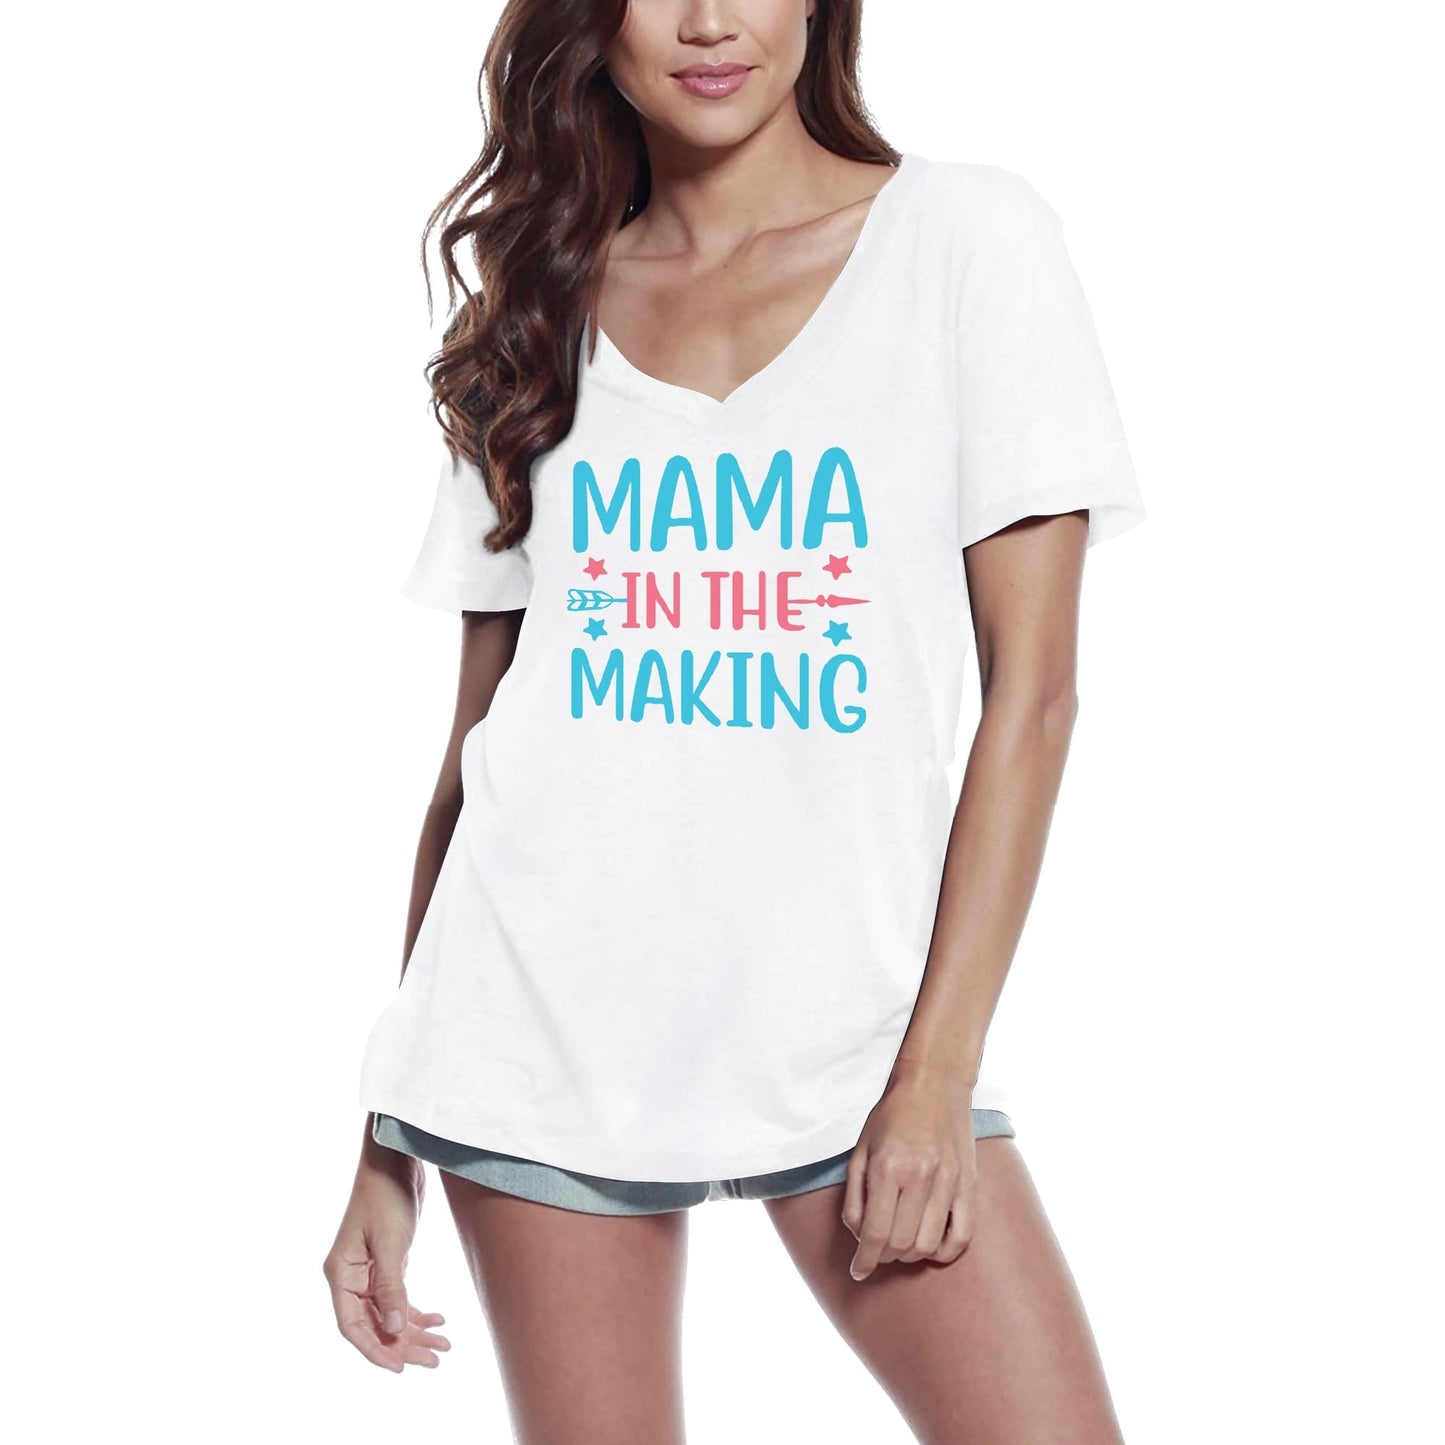 ULTRABASIC Women's V-Neck T-Shirt Mama in the Making - Funny Short Sleeve Tee Shirt Tops